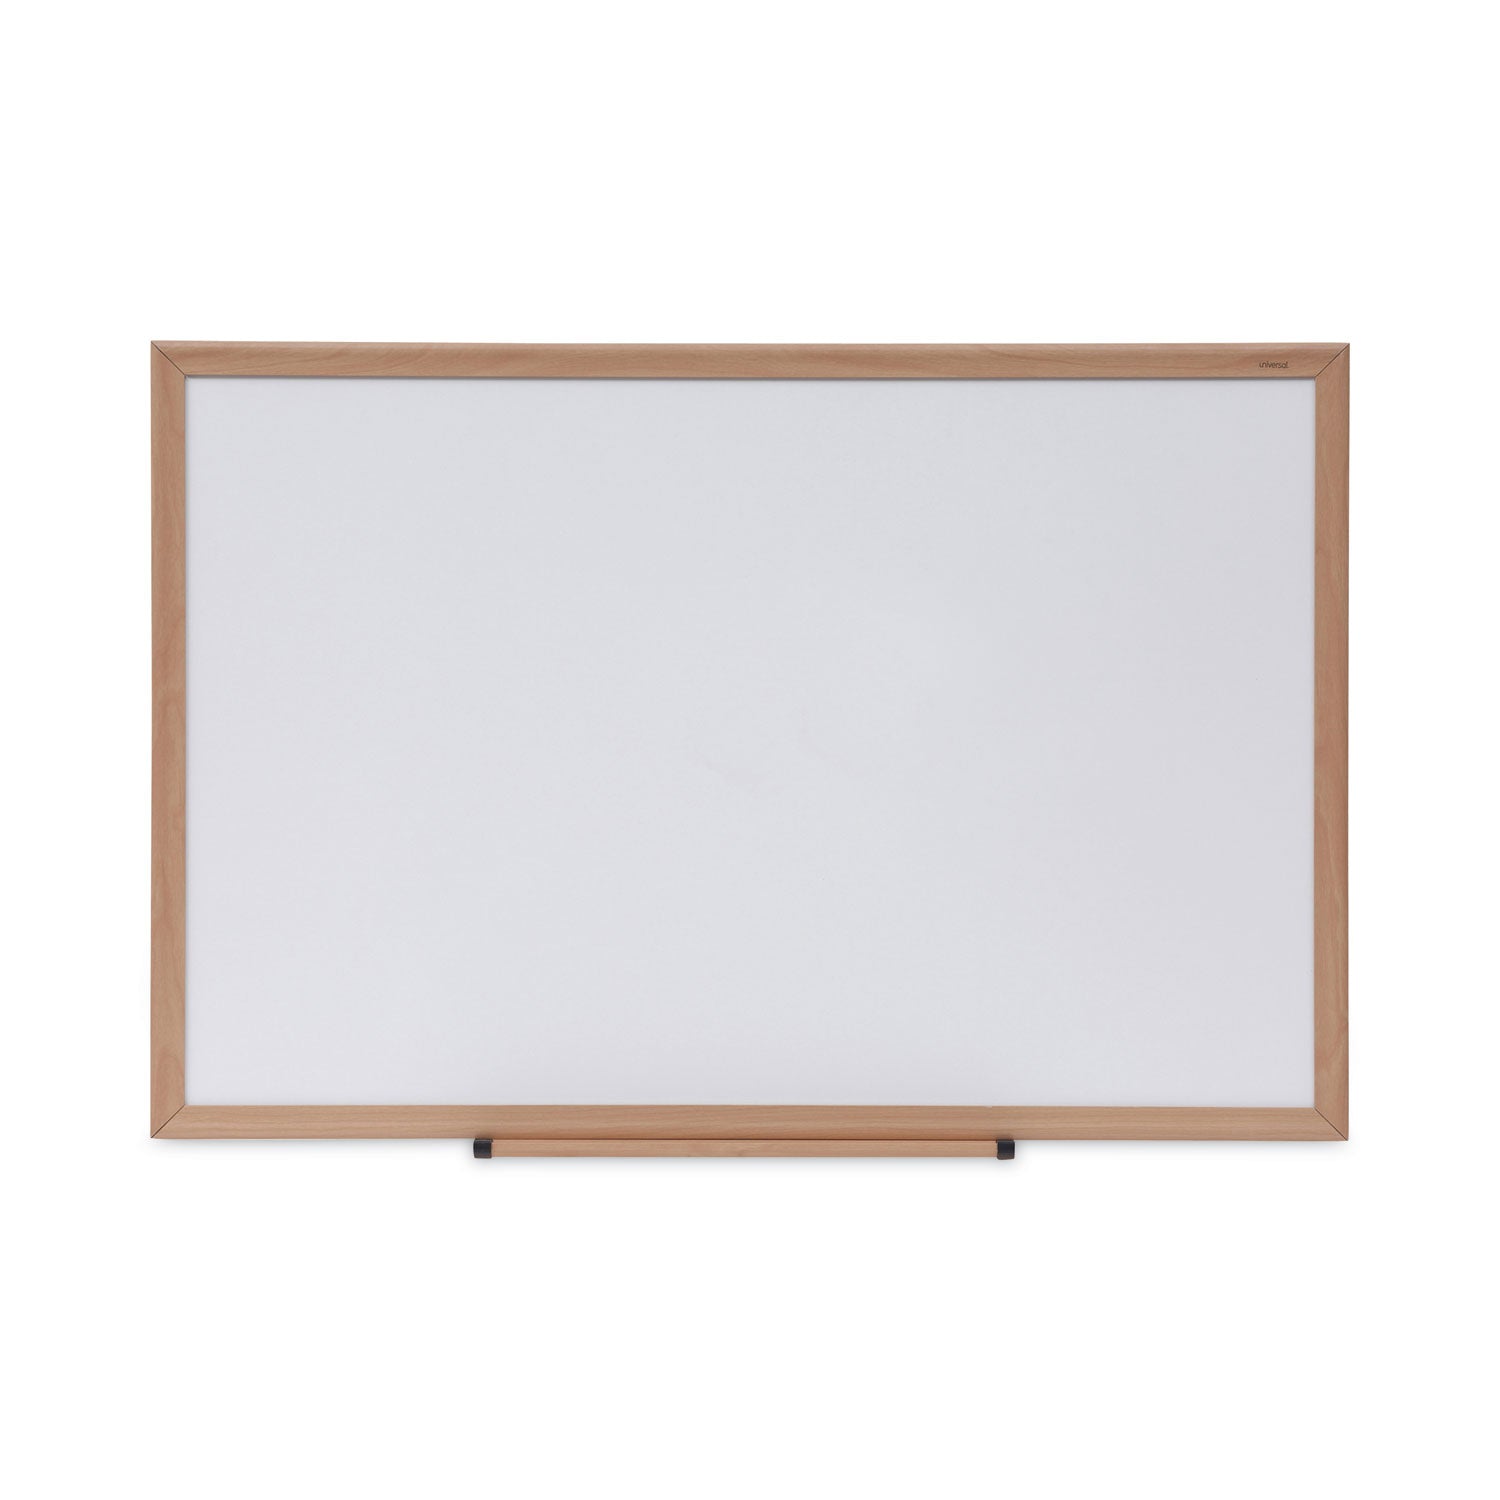 Deluxe Melamine Dry Erase Board, 36 x 24, Melamine White Surface, Oak Fiberboard Frame - 